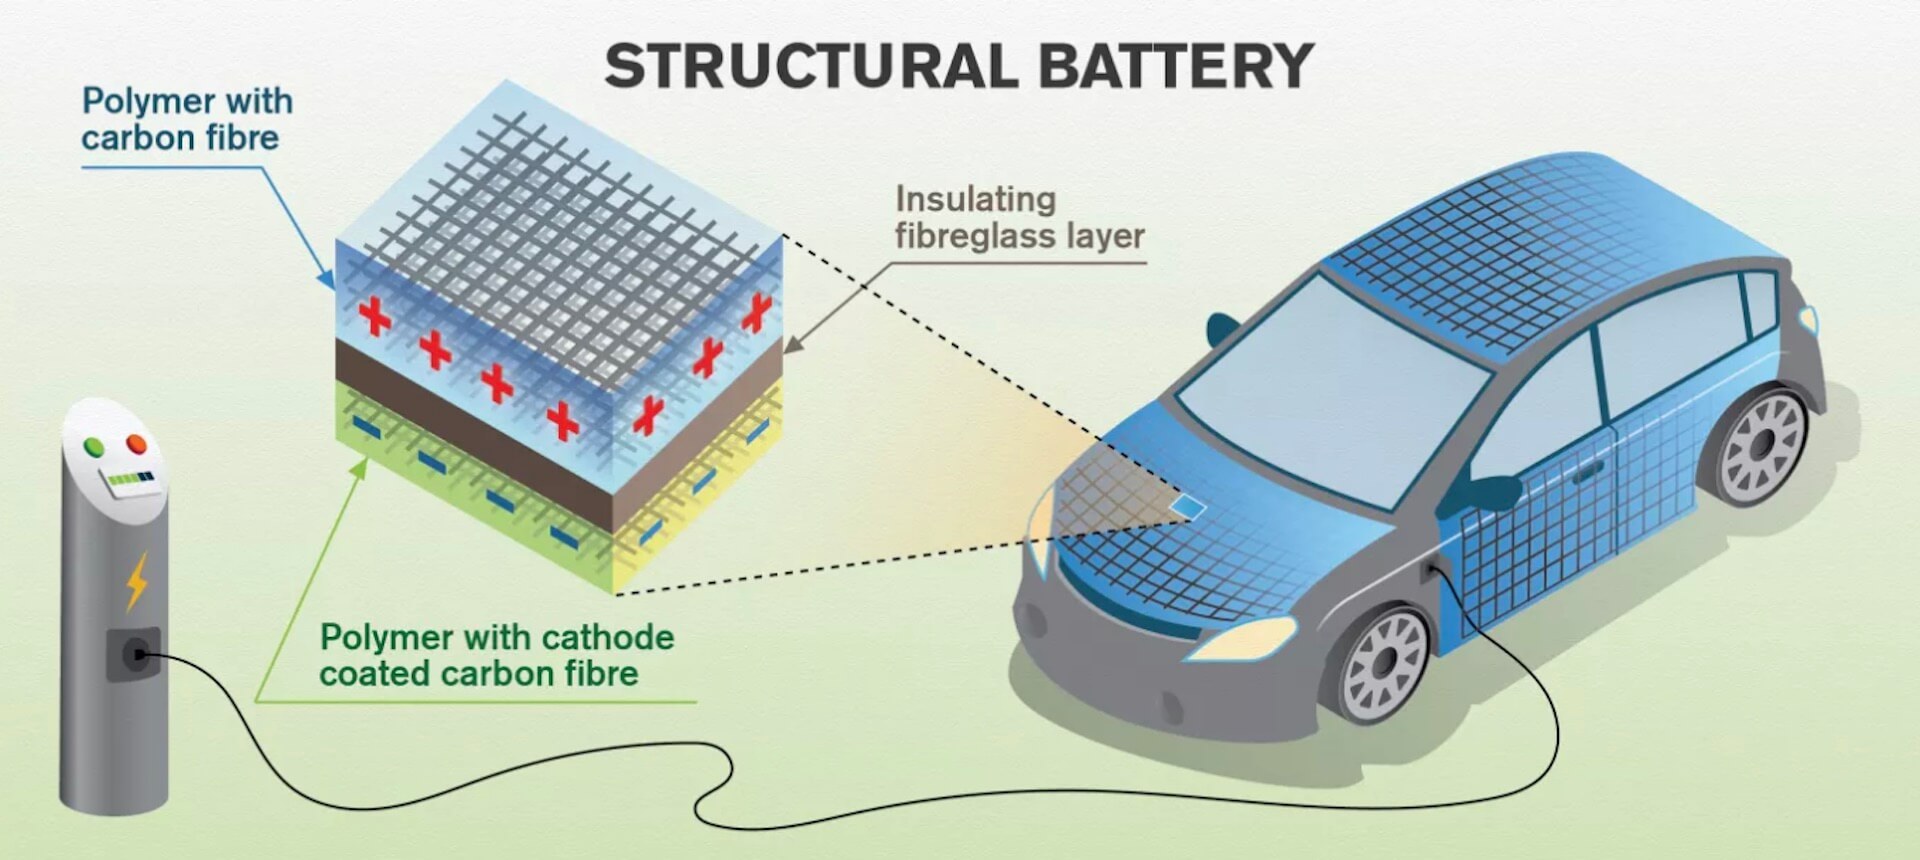 Структура кузова-батареи электромобиля из углеродного волокна